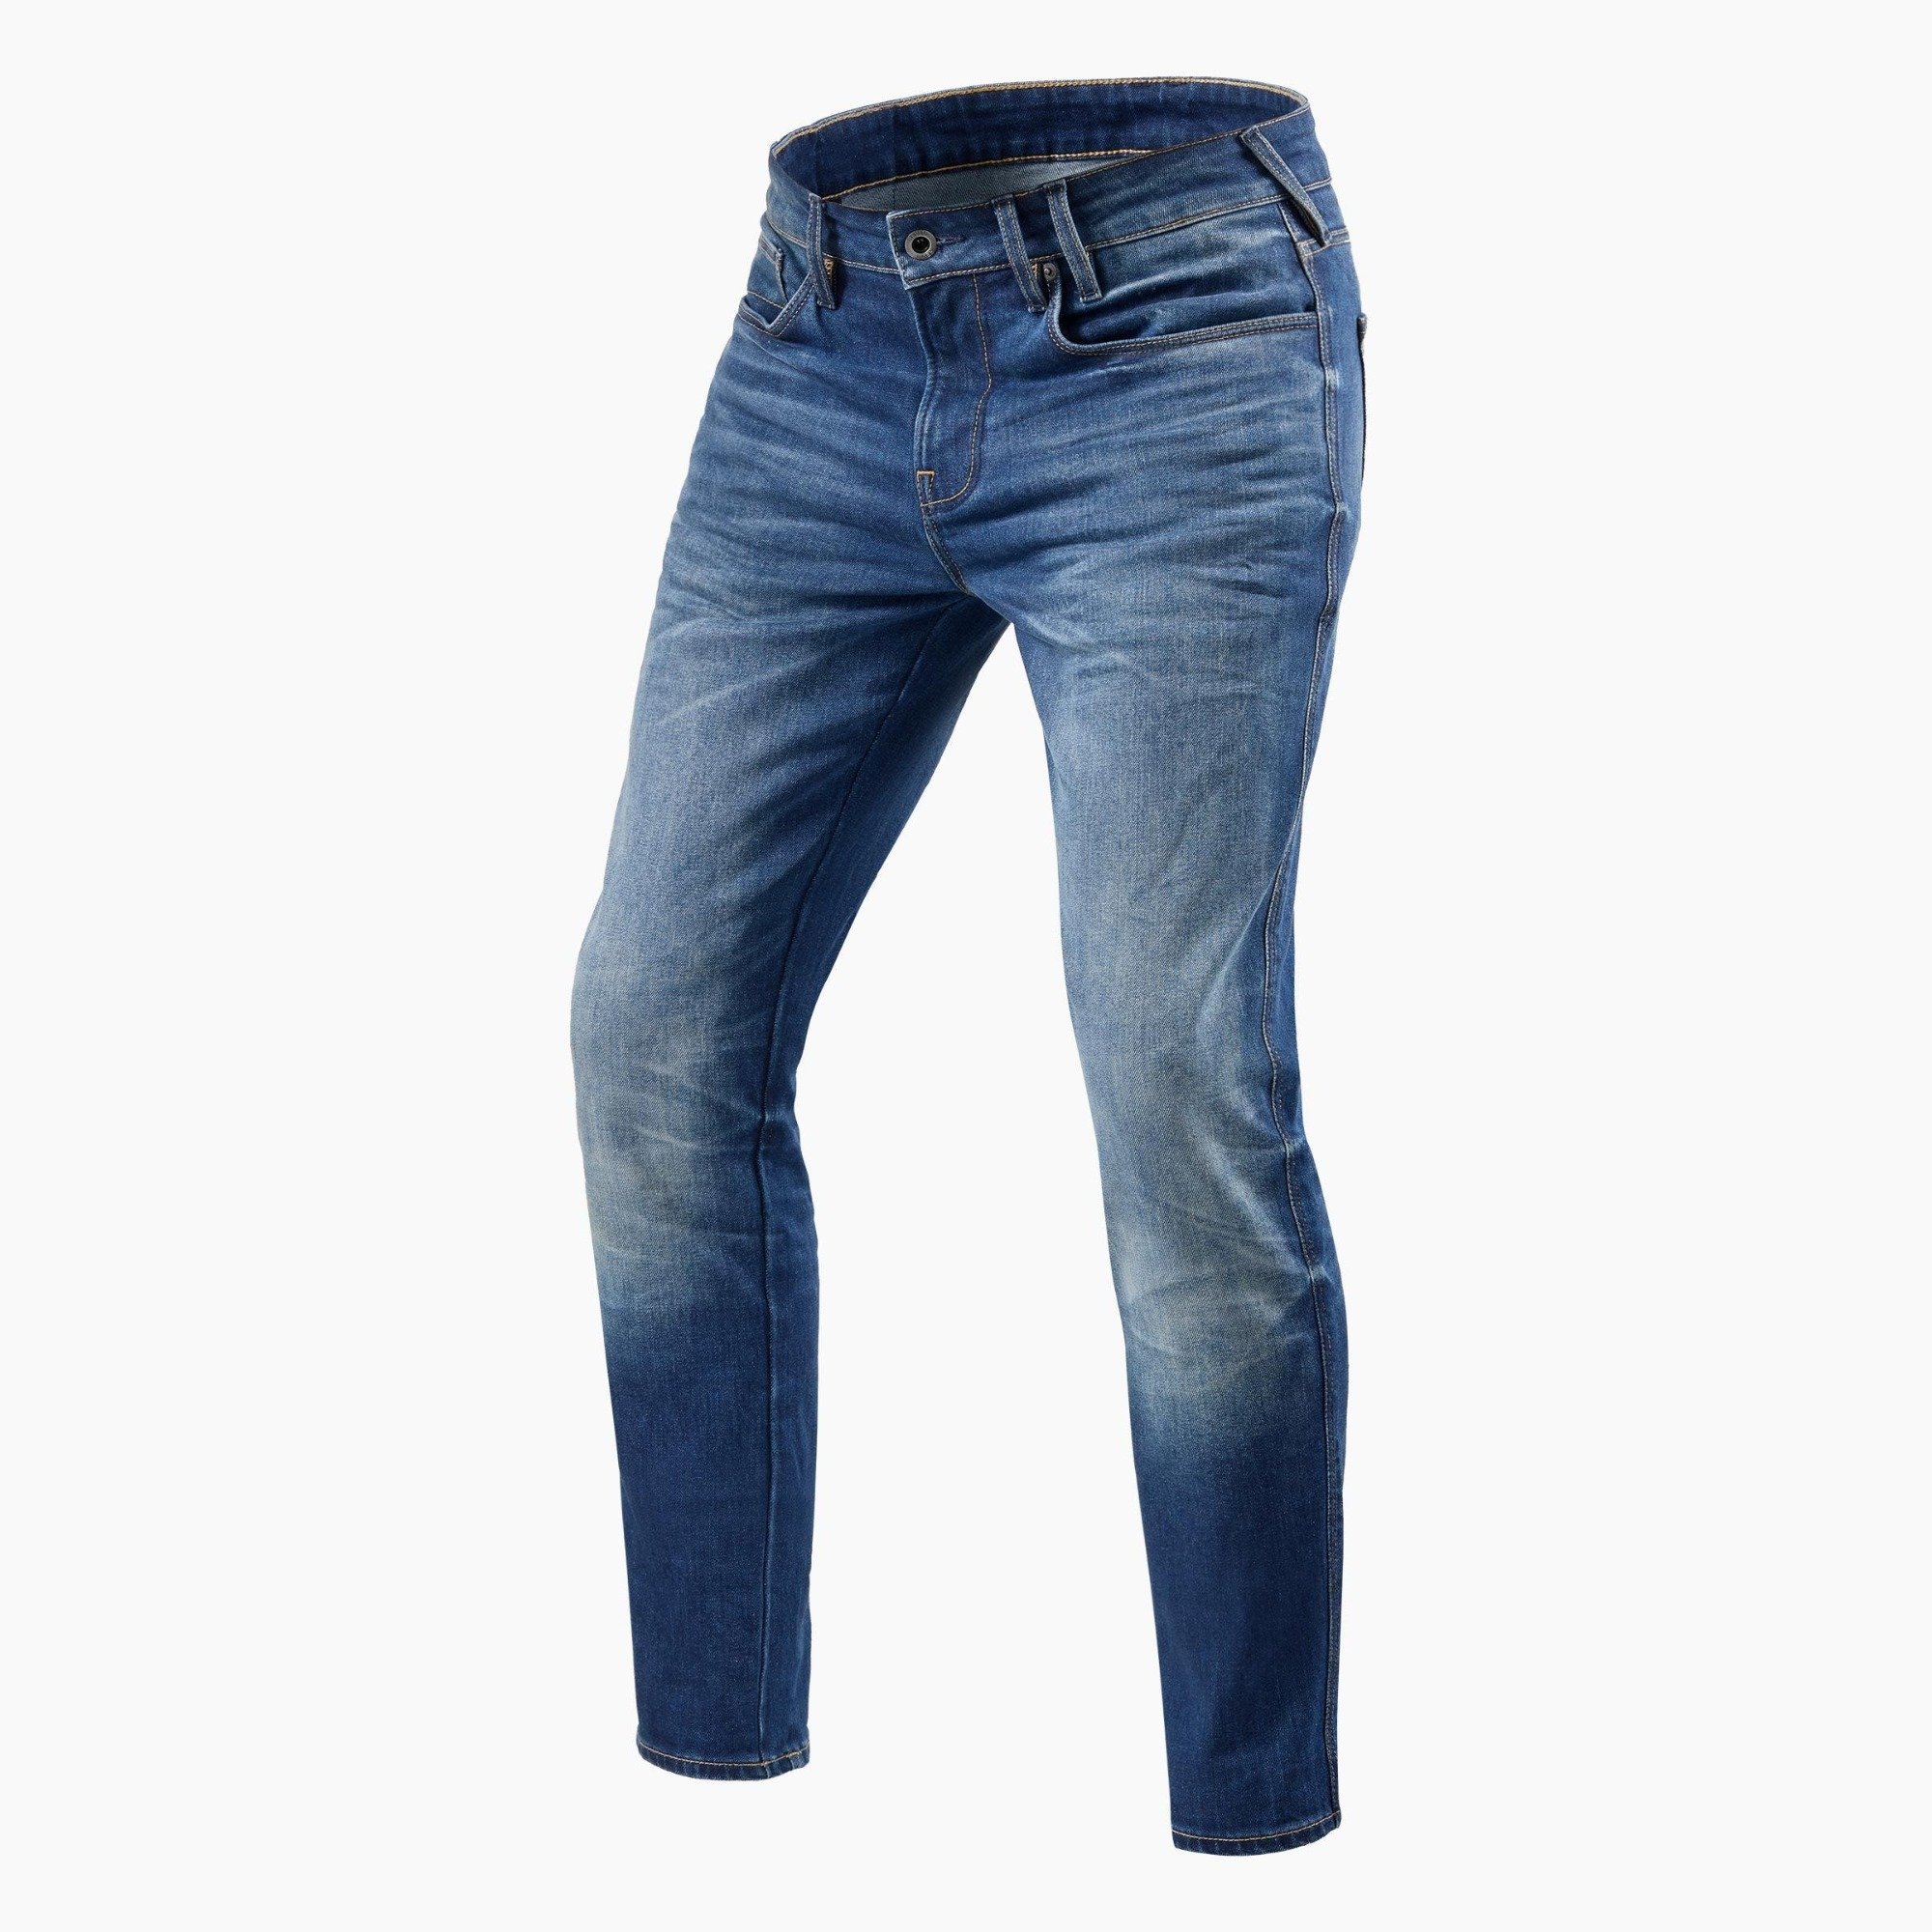 Image of REV'IT! Jeans Carlin SK Mid Blue Used Motorcycle Jeans Size L34/W38 EN